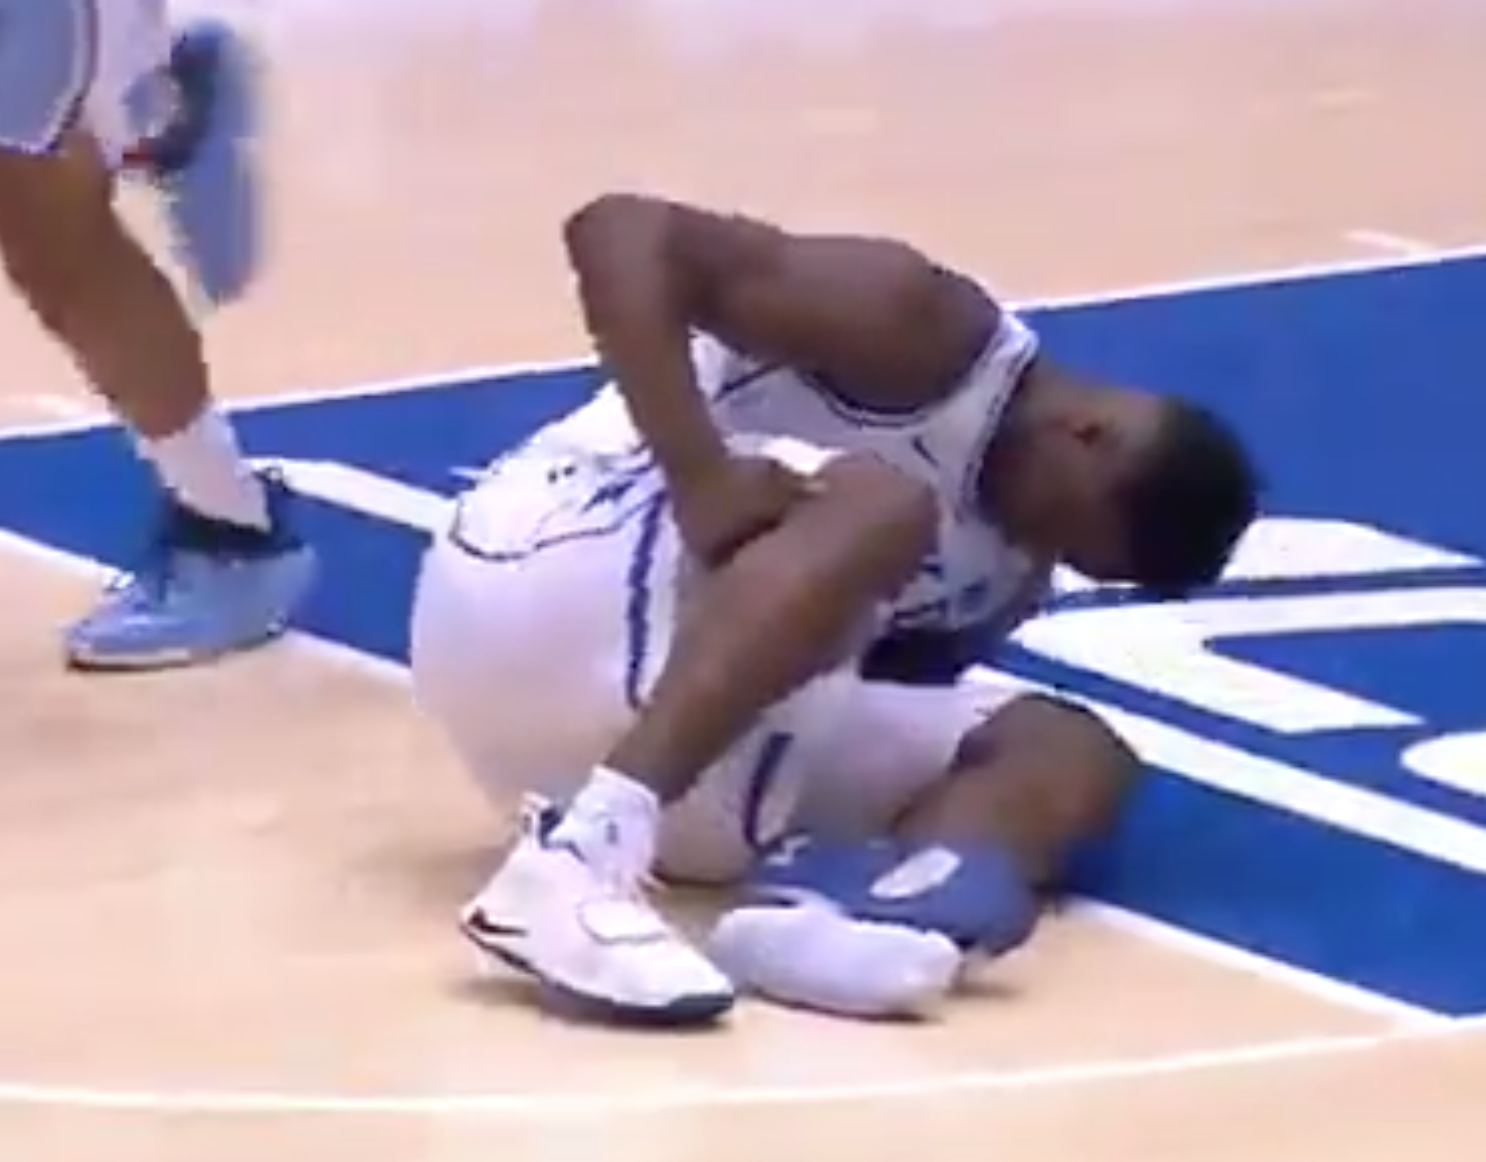 Duke player Zion Williamson injured when Nike shoe blows apart in game